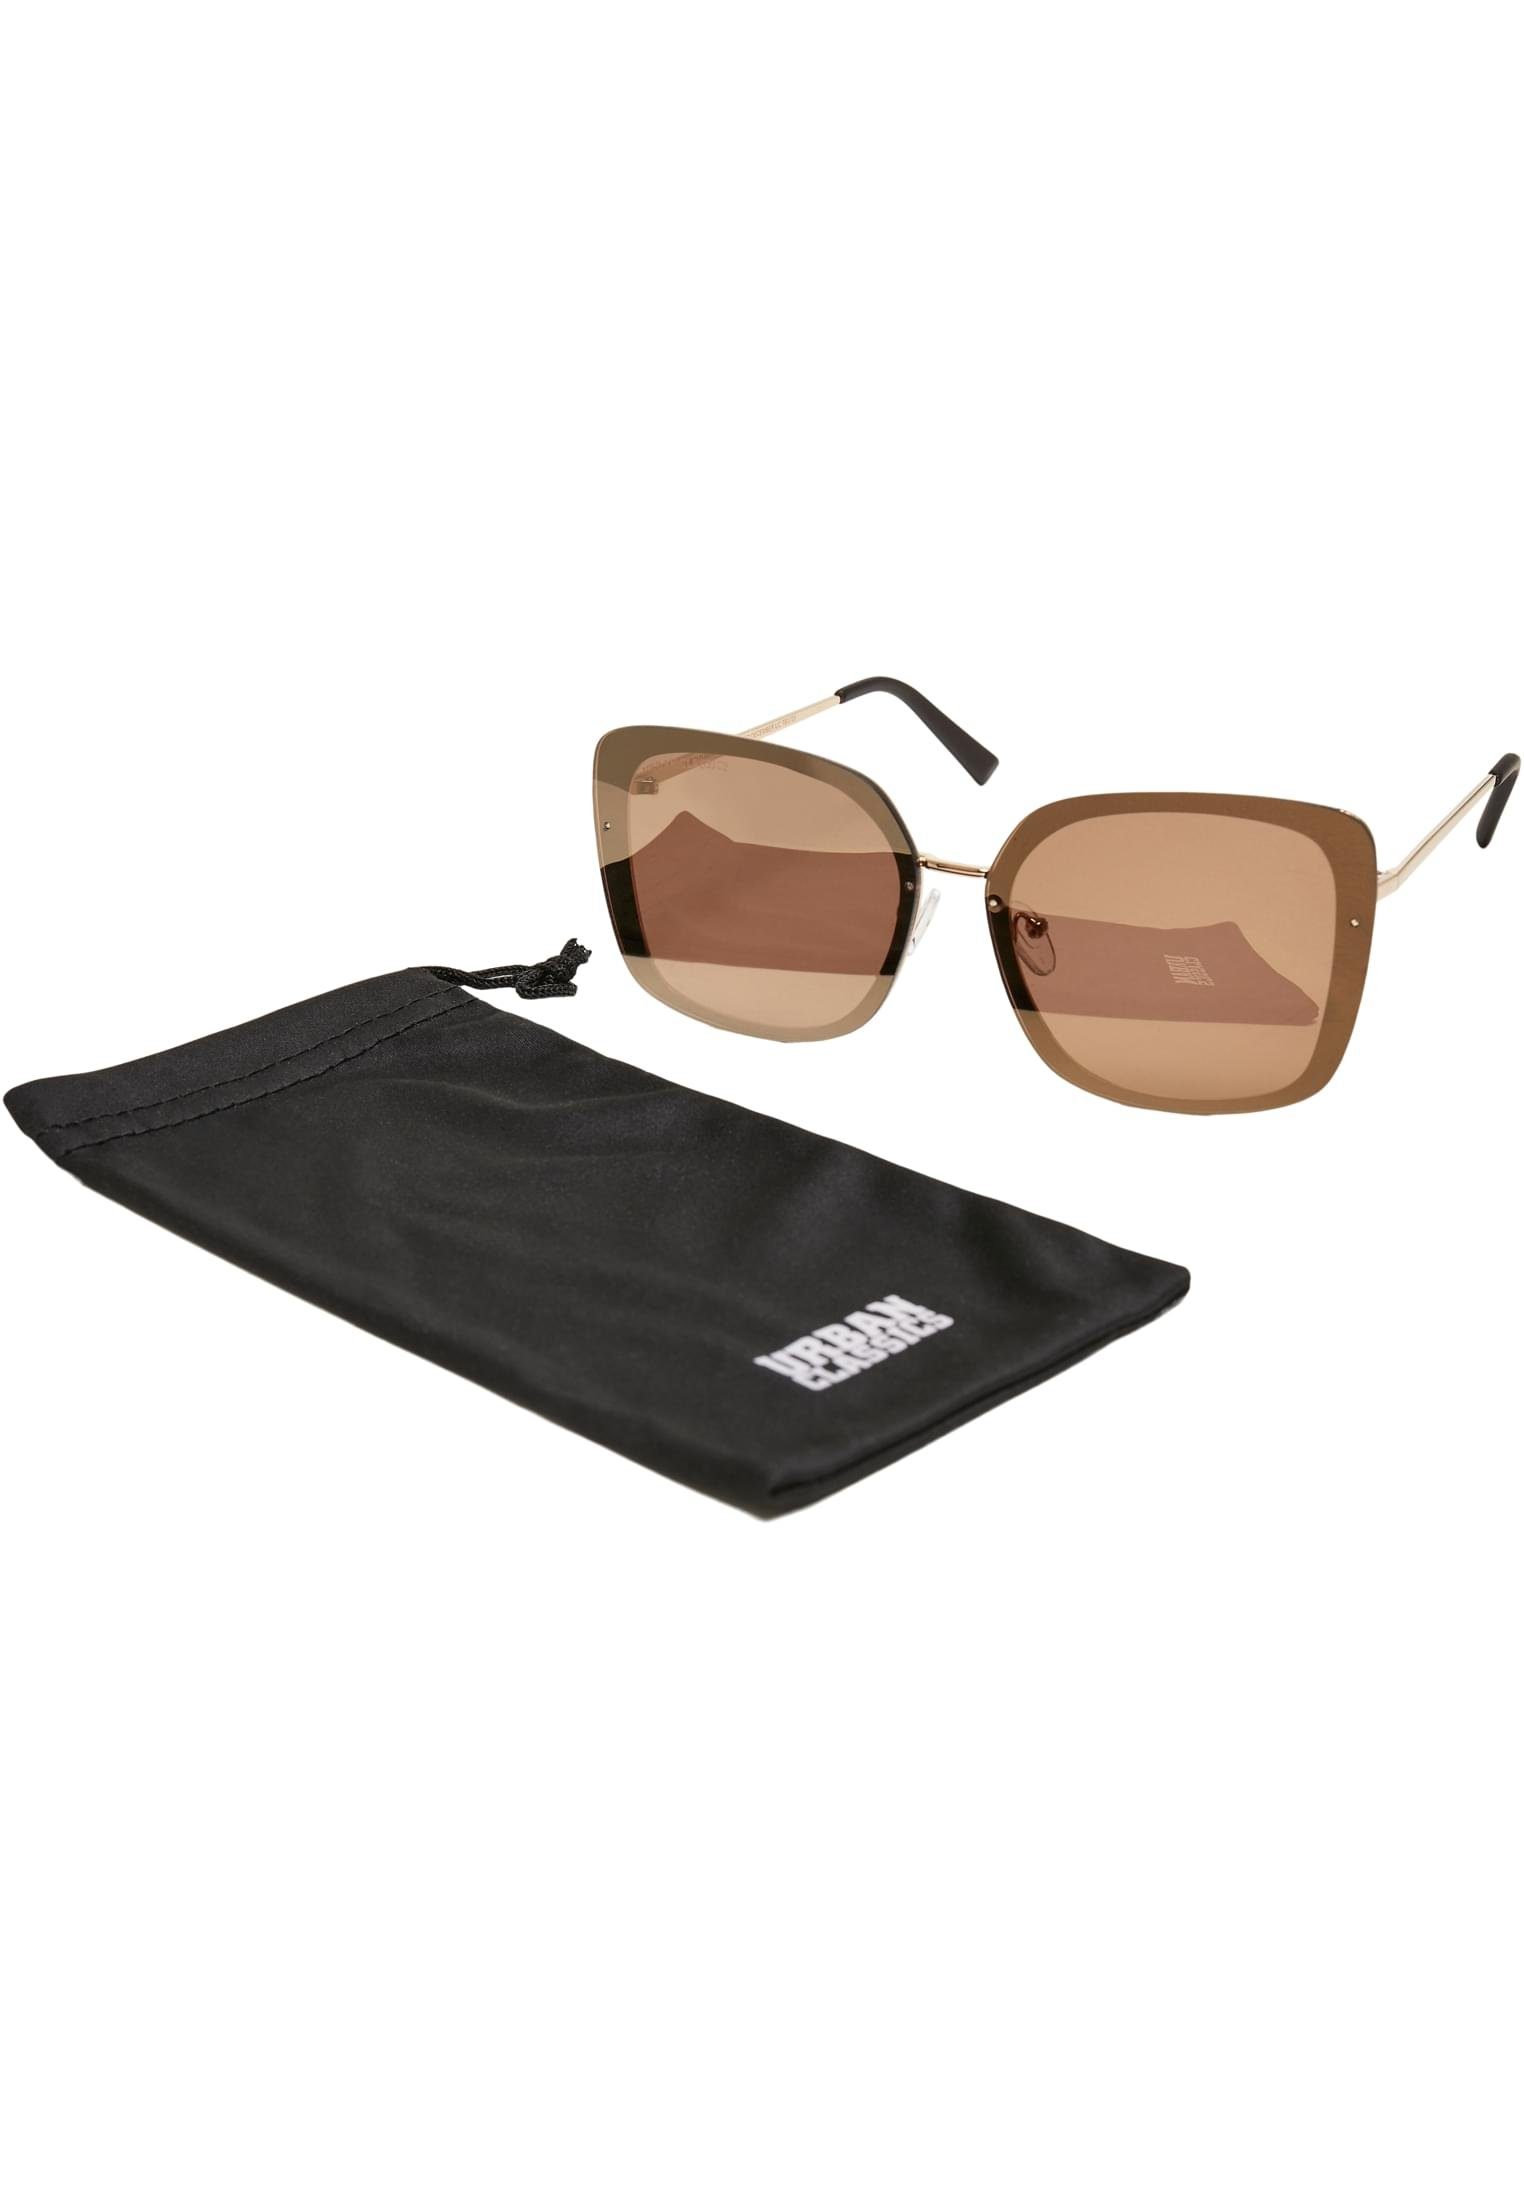 großer Release-Sale URBAN CLASSICS Sonnenbrille Accessoires Sunglasses December gold UC